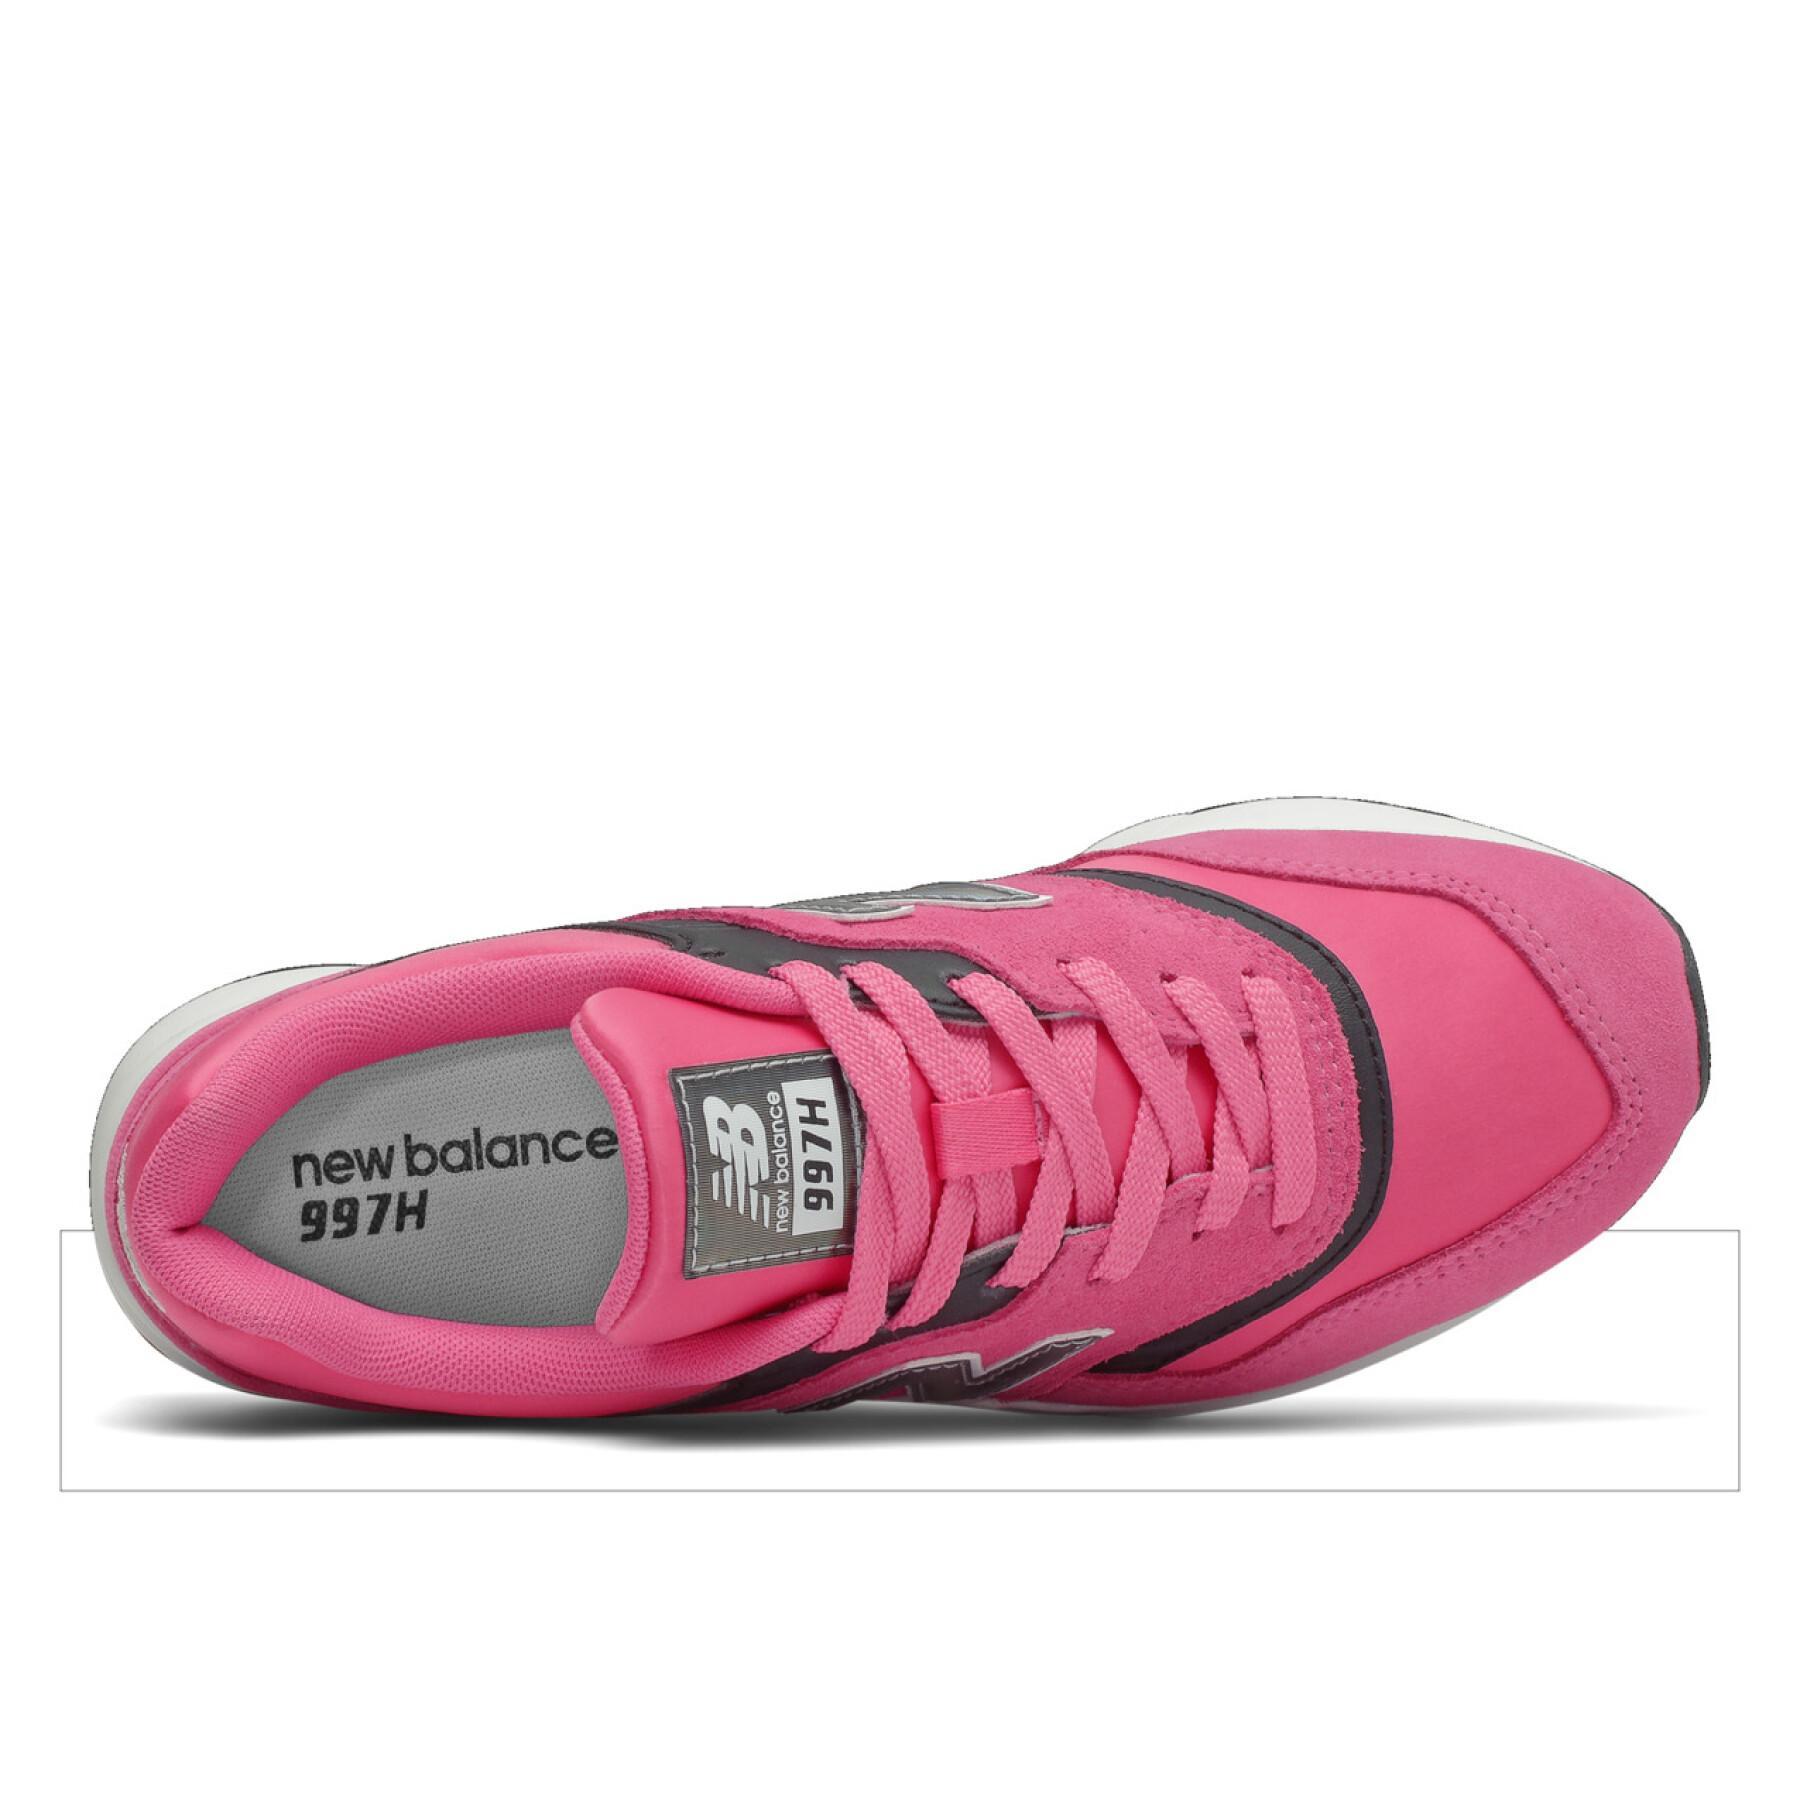 Women's shoes New Balance cw997h v1